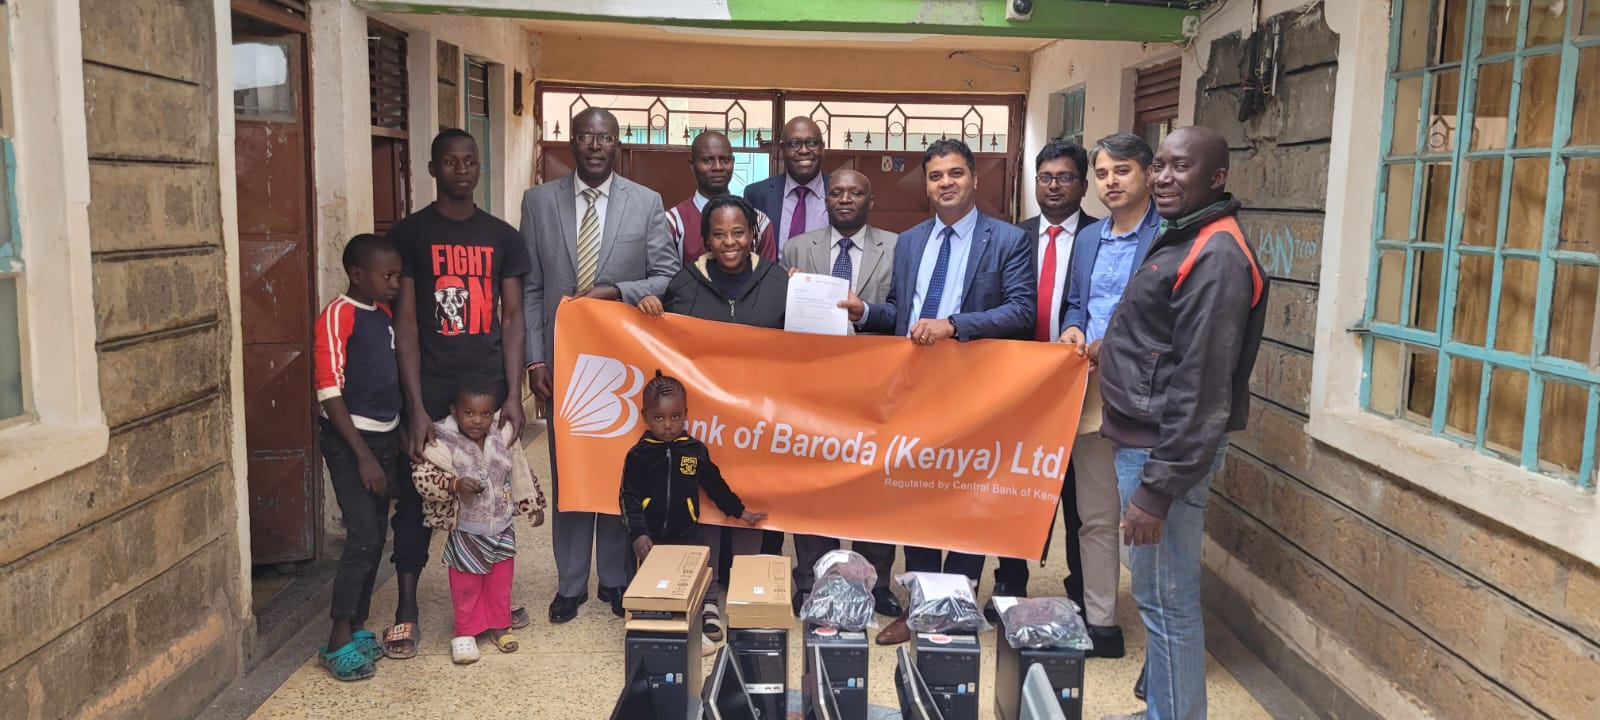 Bank of Baroda (Kenya) Ltd